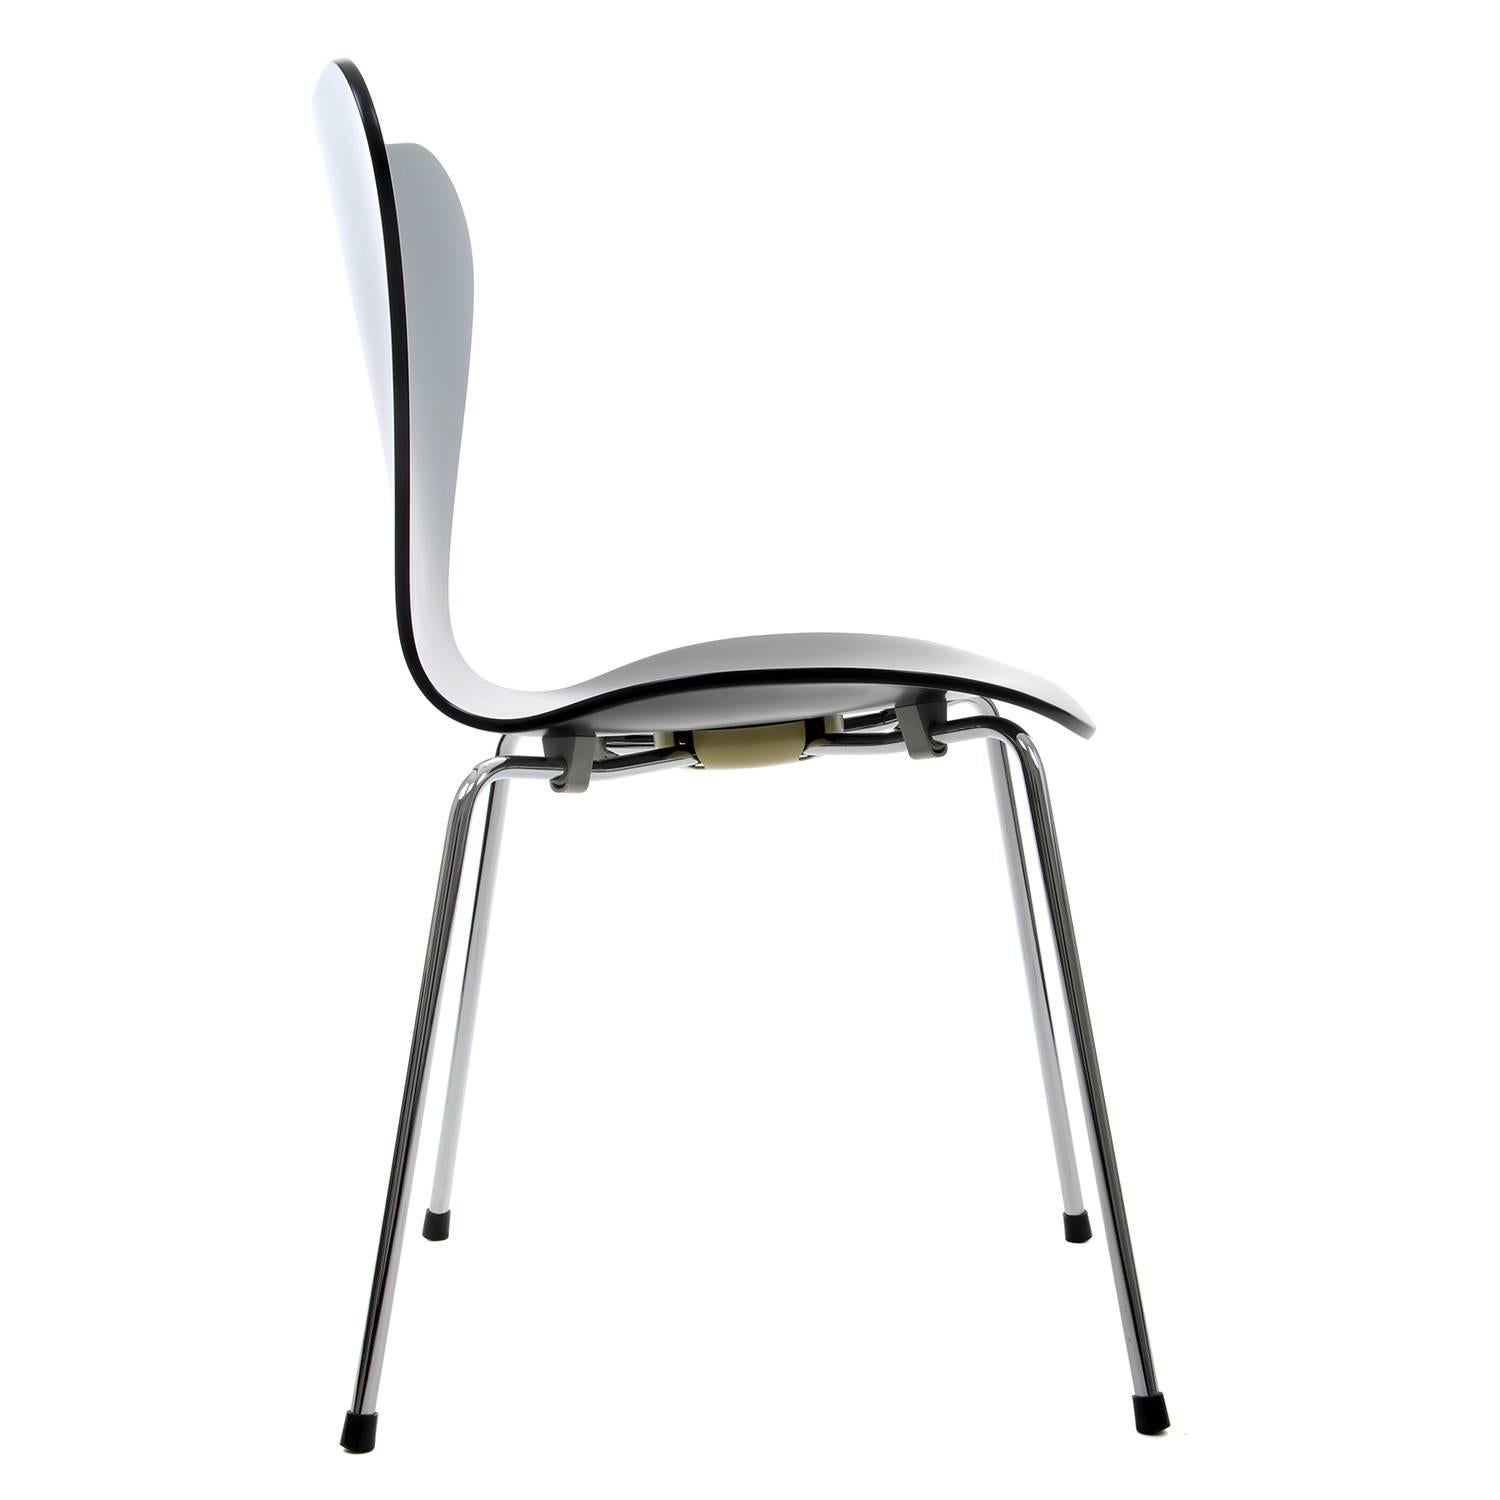 Scandinavian Modern Series 7 Chair by Arne Jacobsen, for Fritz Hansen 1955. Professionally Restored For Sale